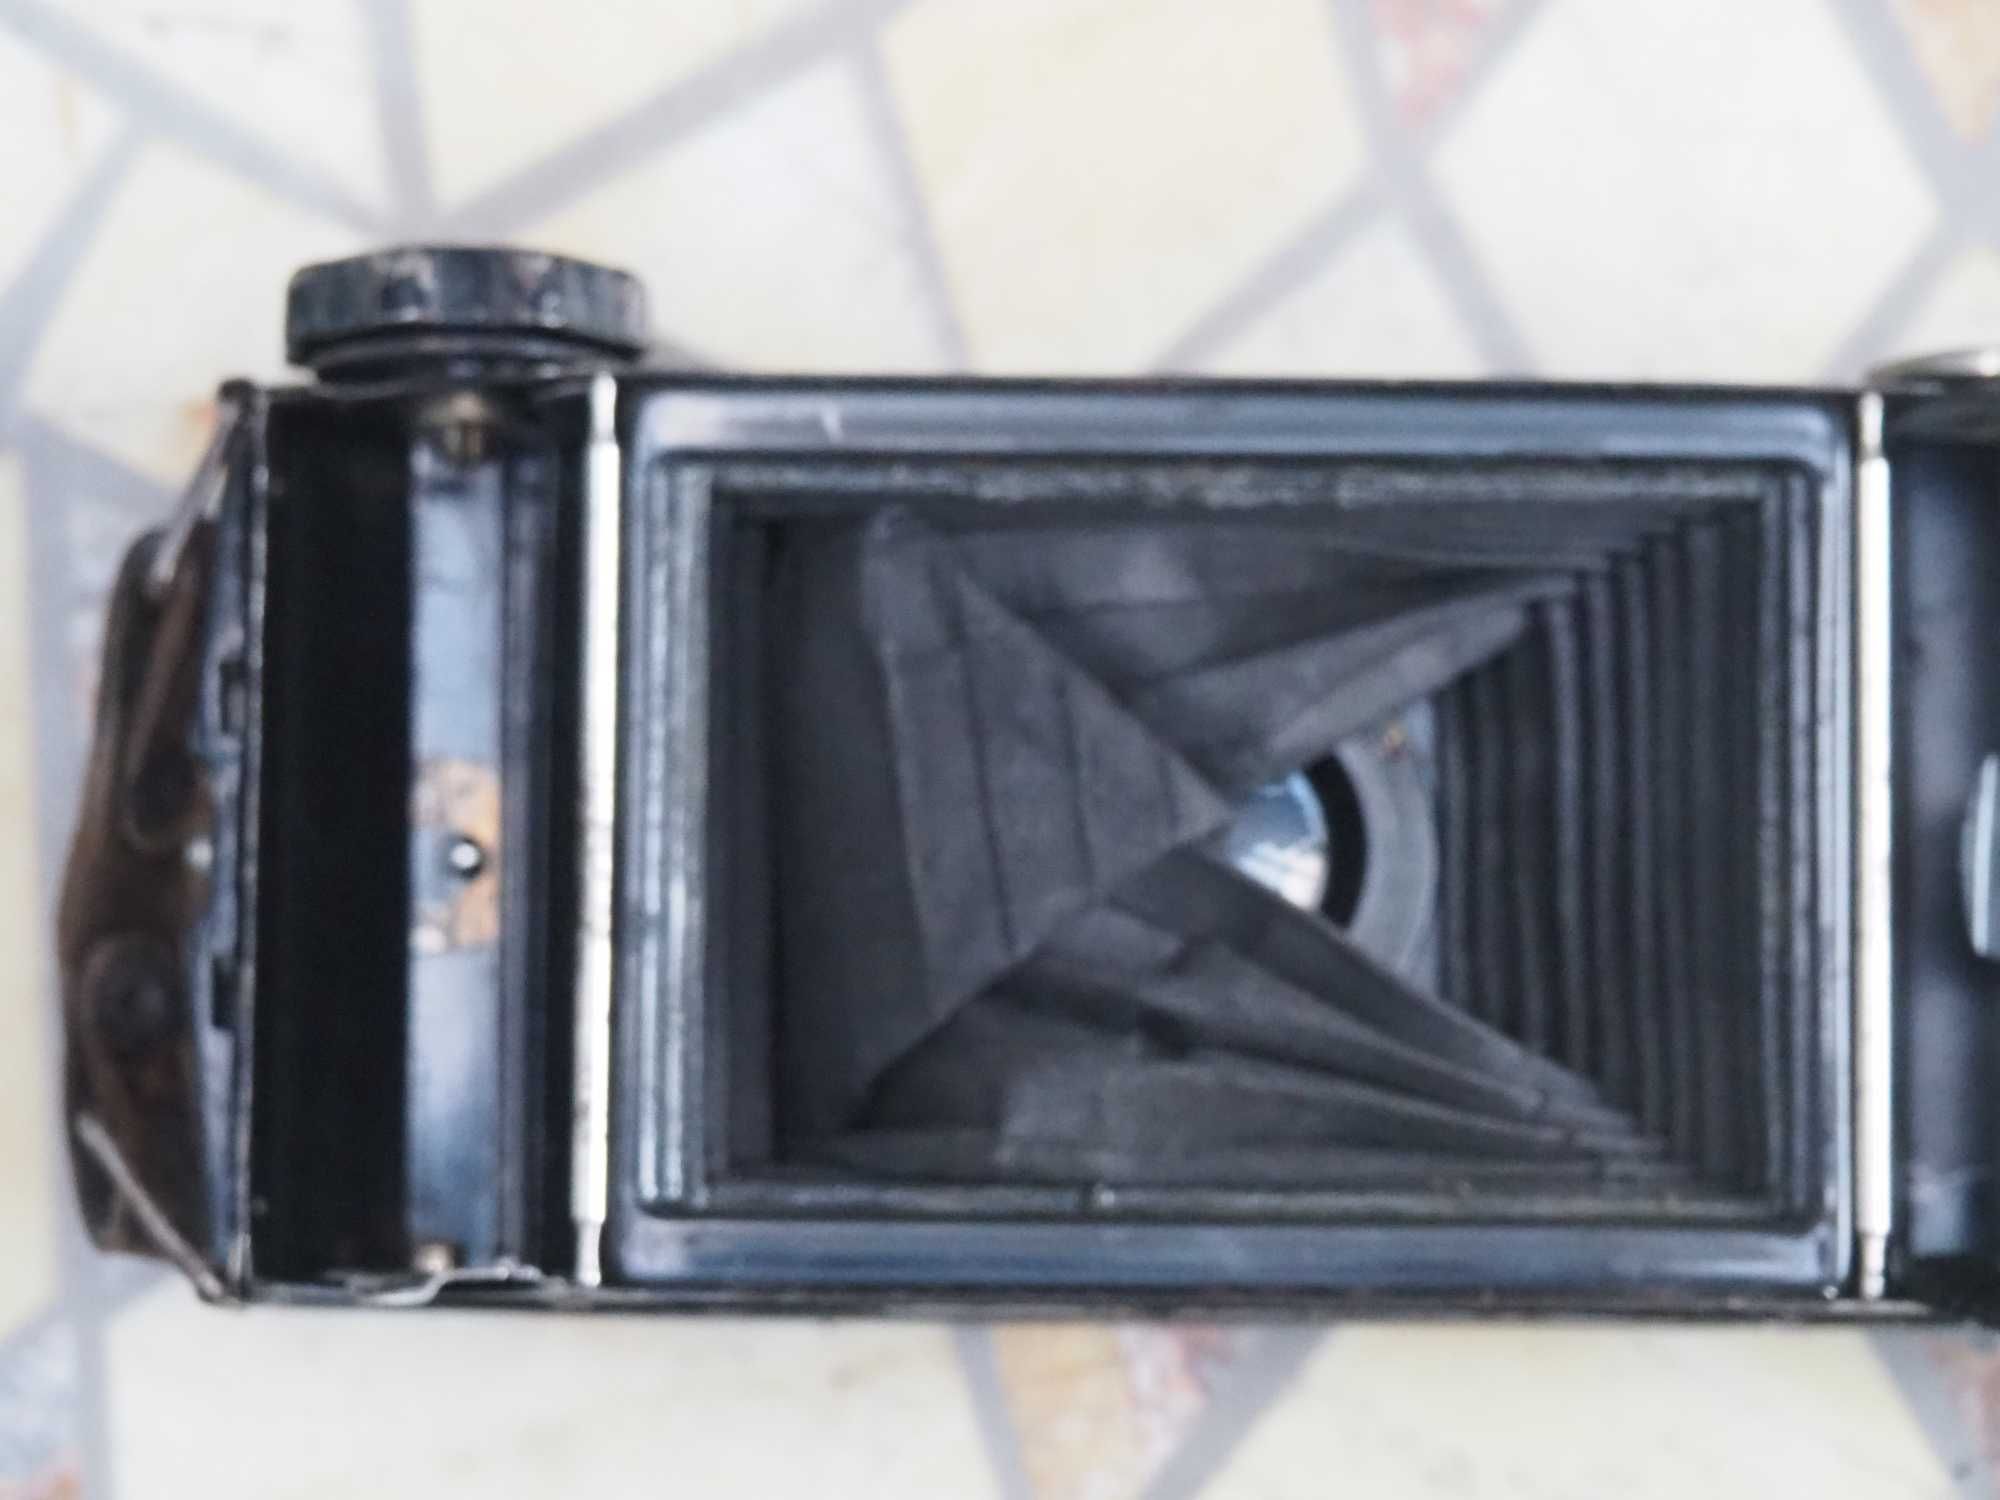 Stary aparat fotograficzny PRONTOR